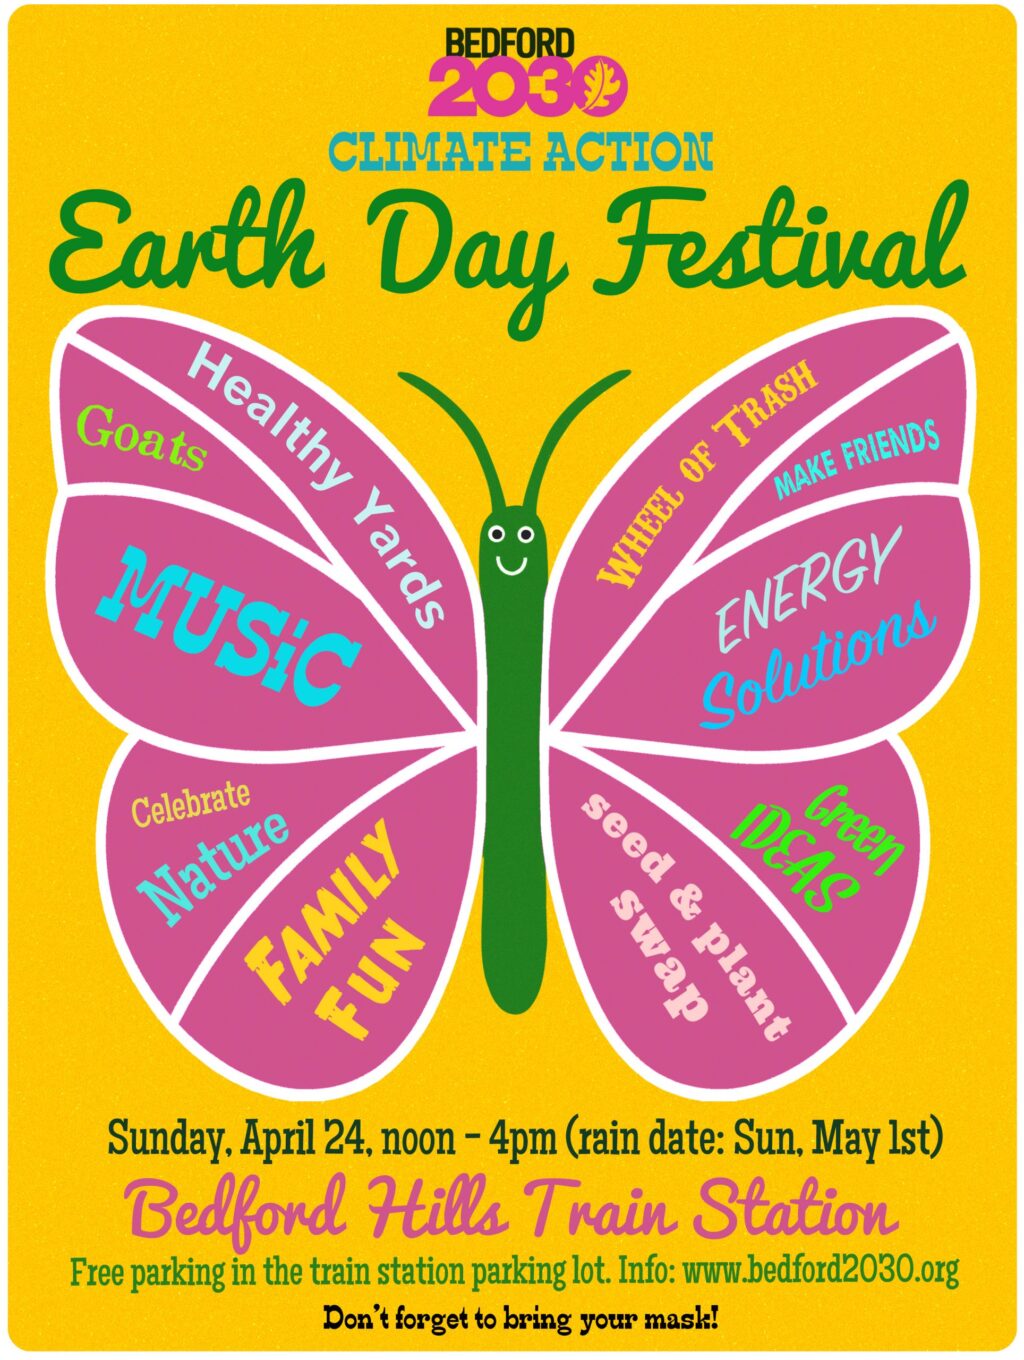 Bedford 2030 Earth Day Festival